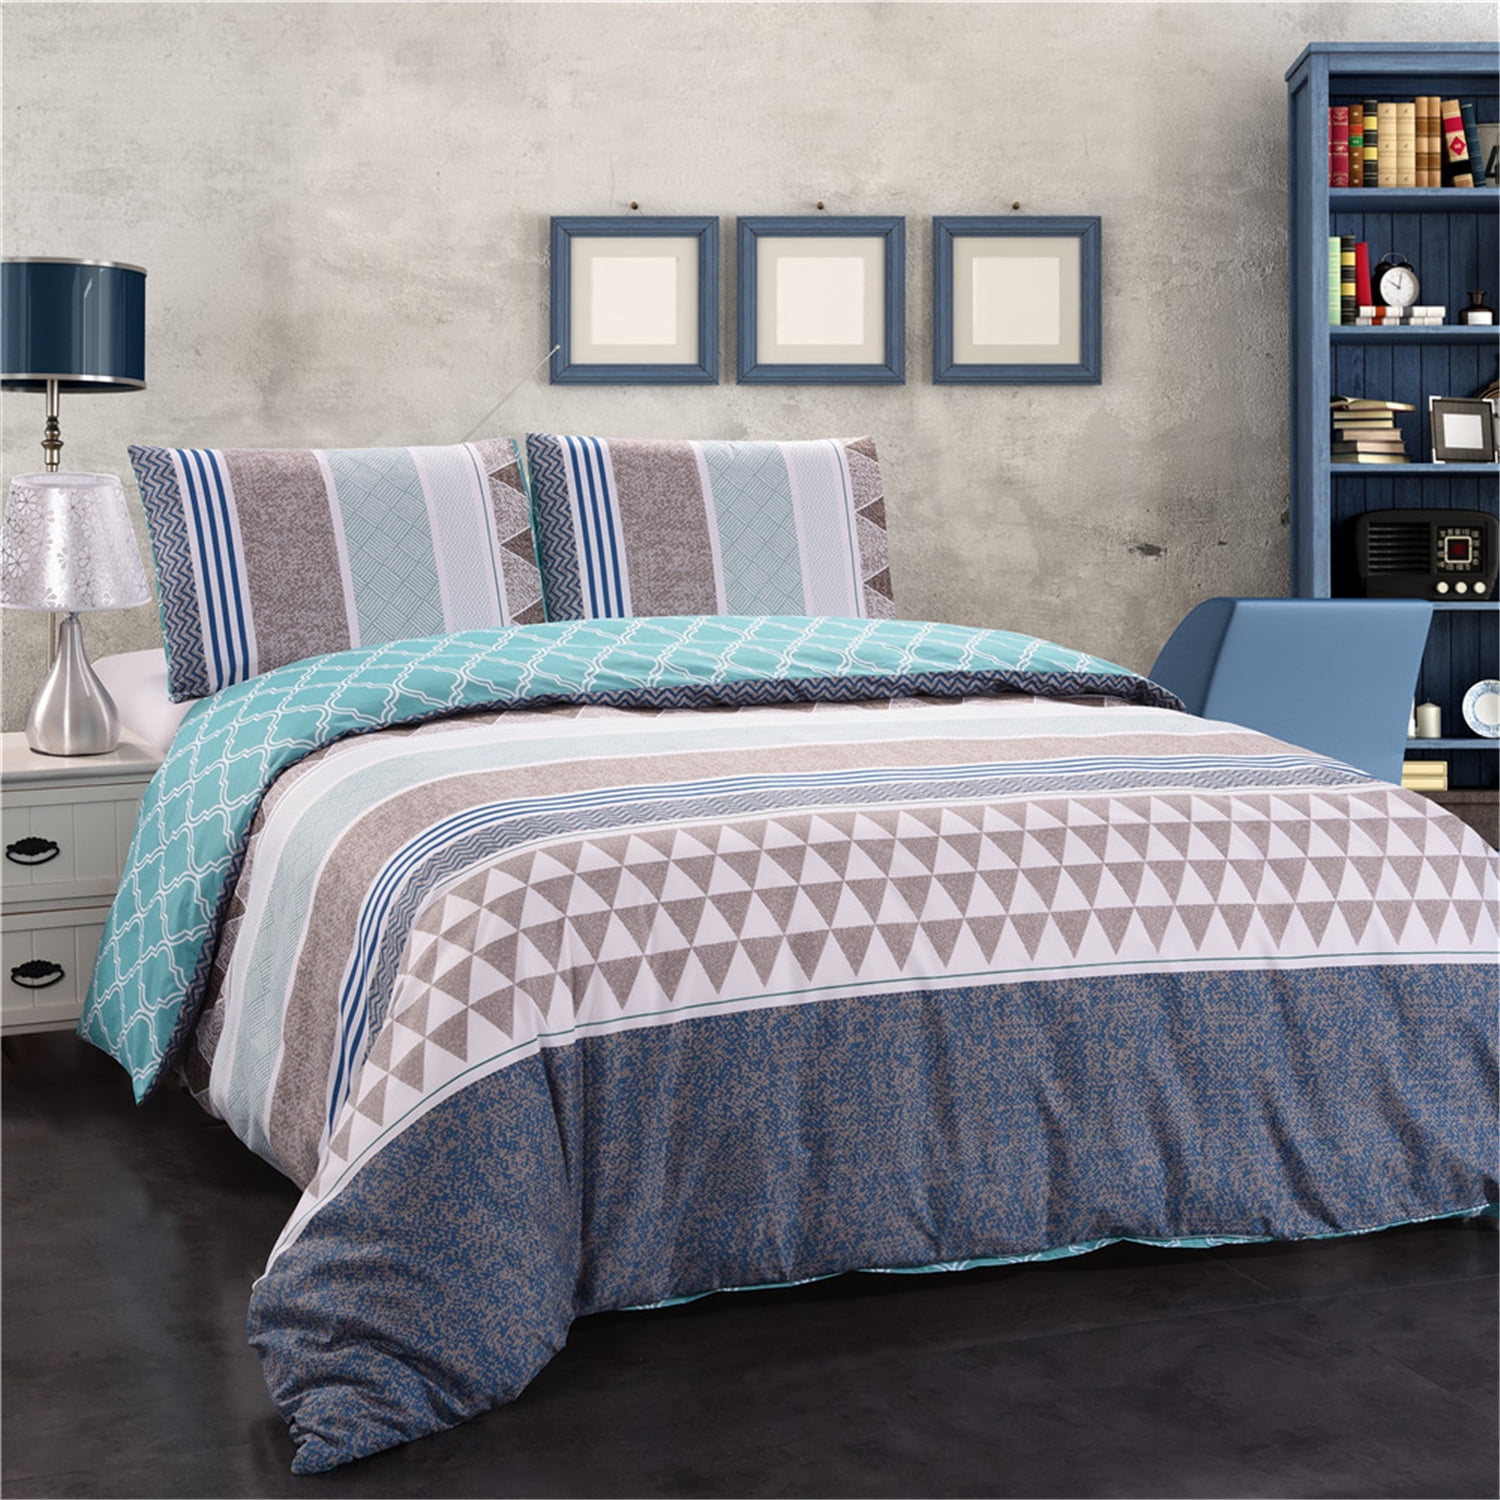 Luxury Solid C Microfiber Bedding Comforter Sets with Shams Details about   JML Comforter Set 